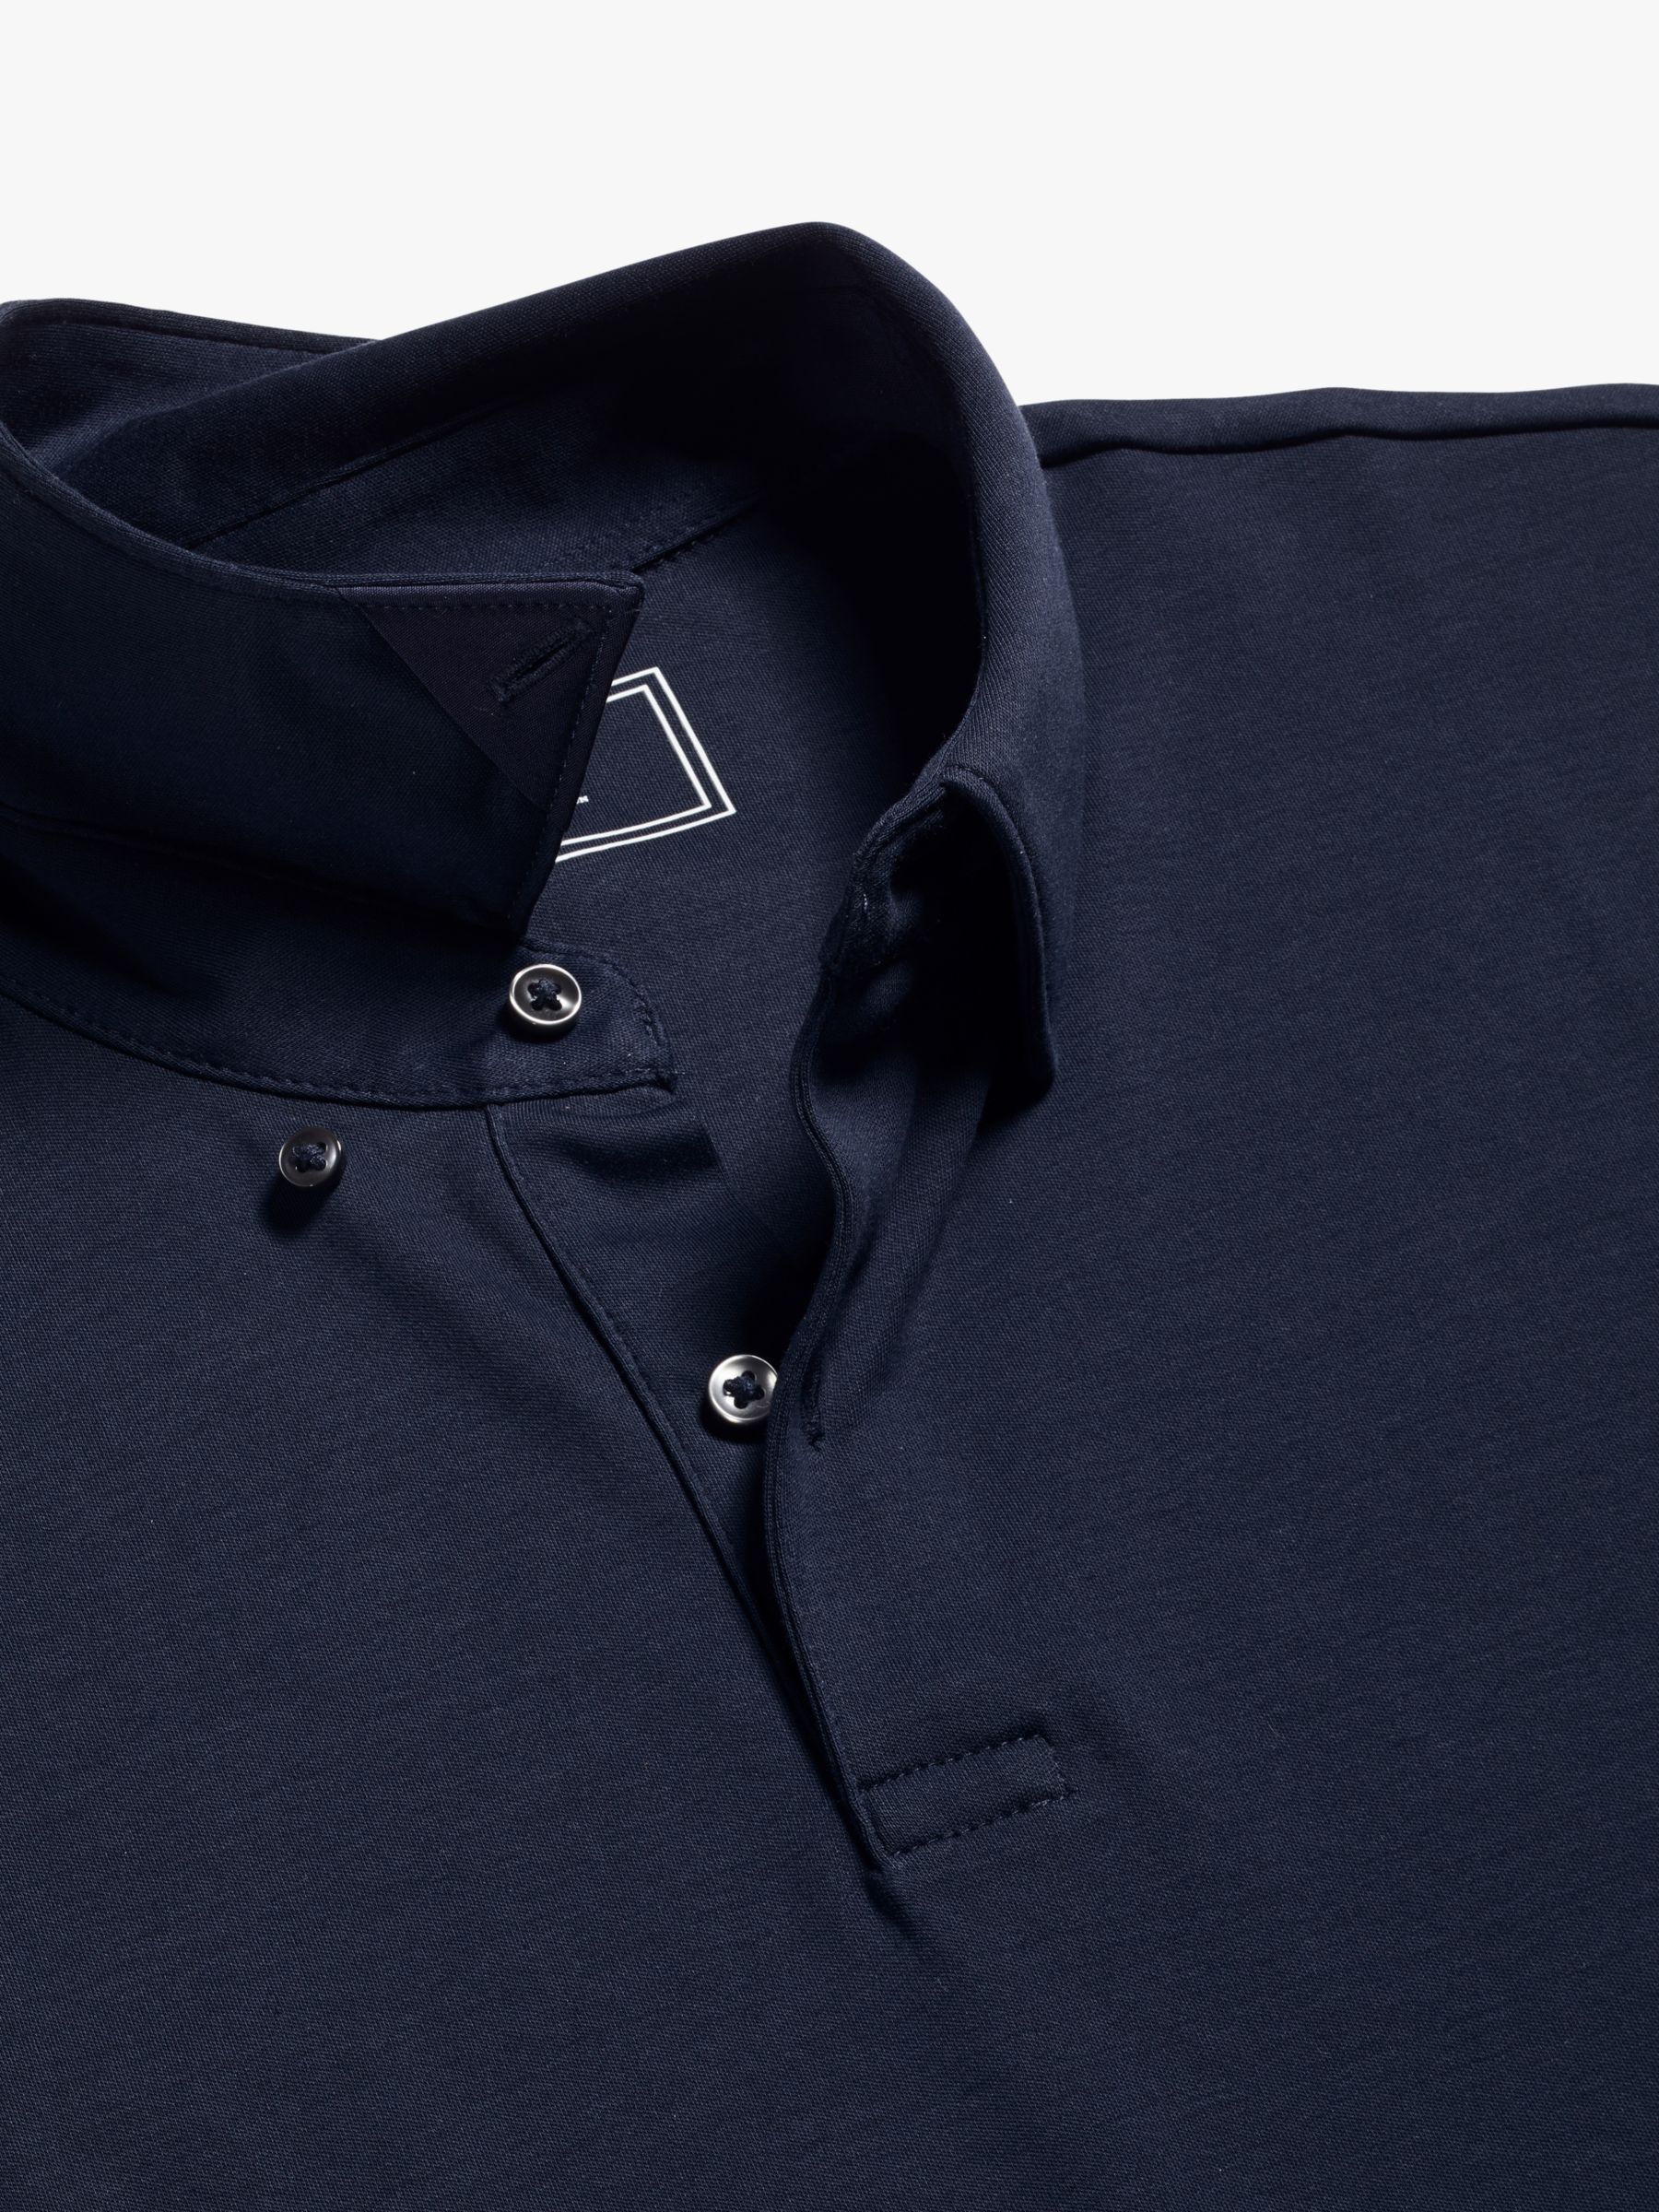 Charles Tyrwhitt Smart Jersey Short Sleeve Polo, Navy Blue, S